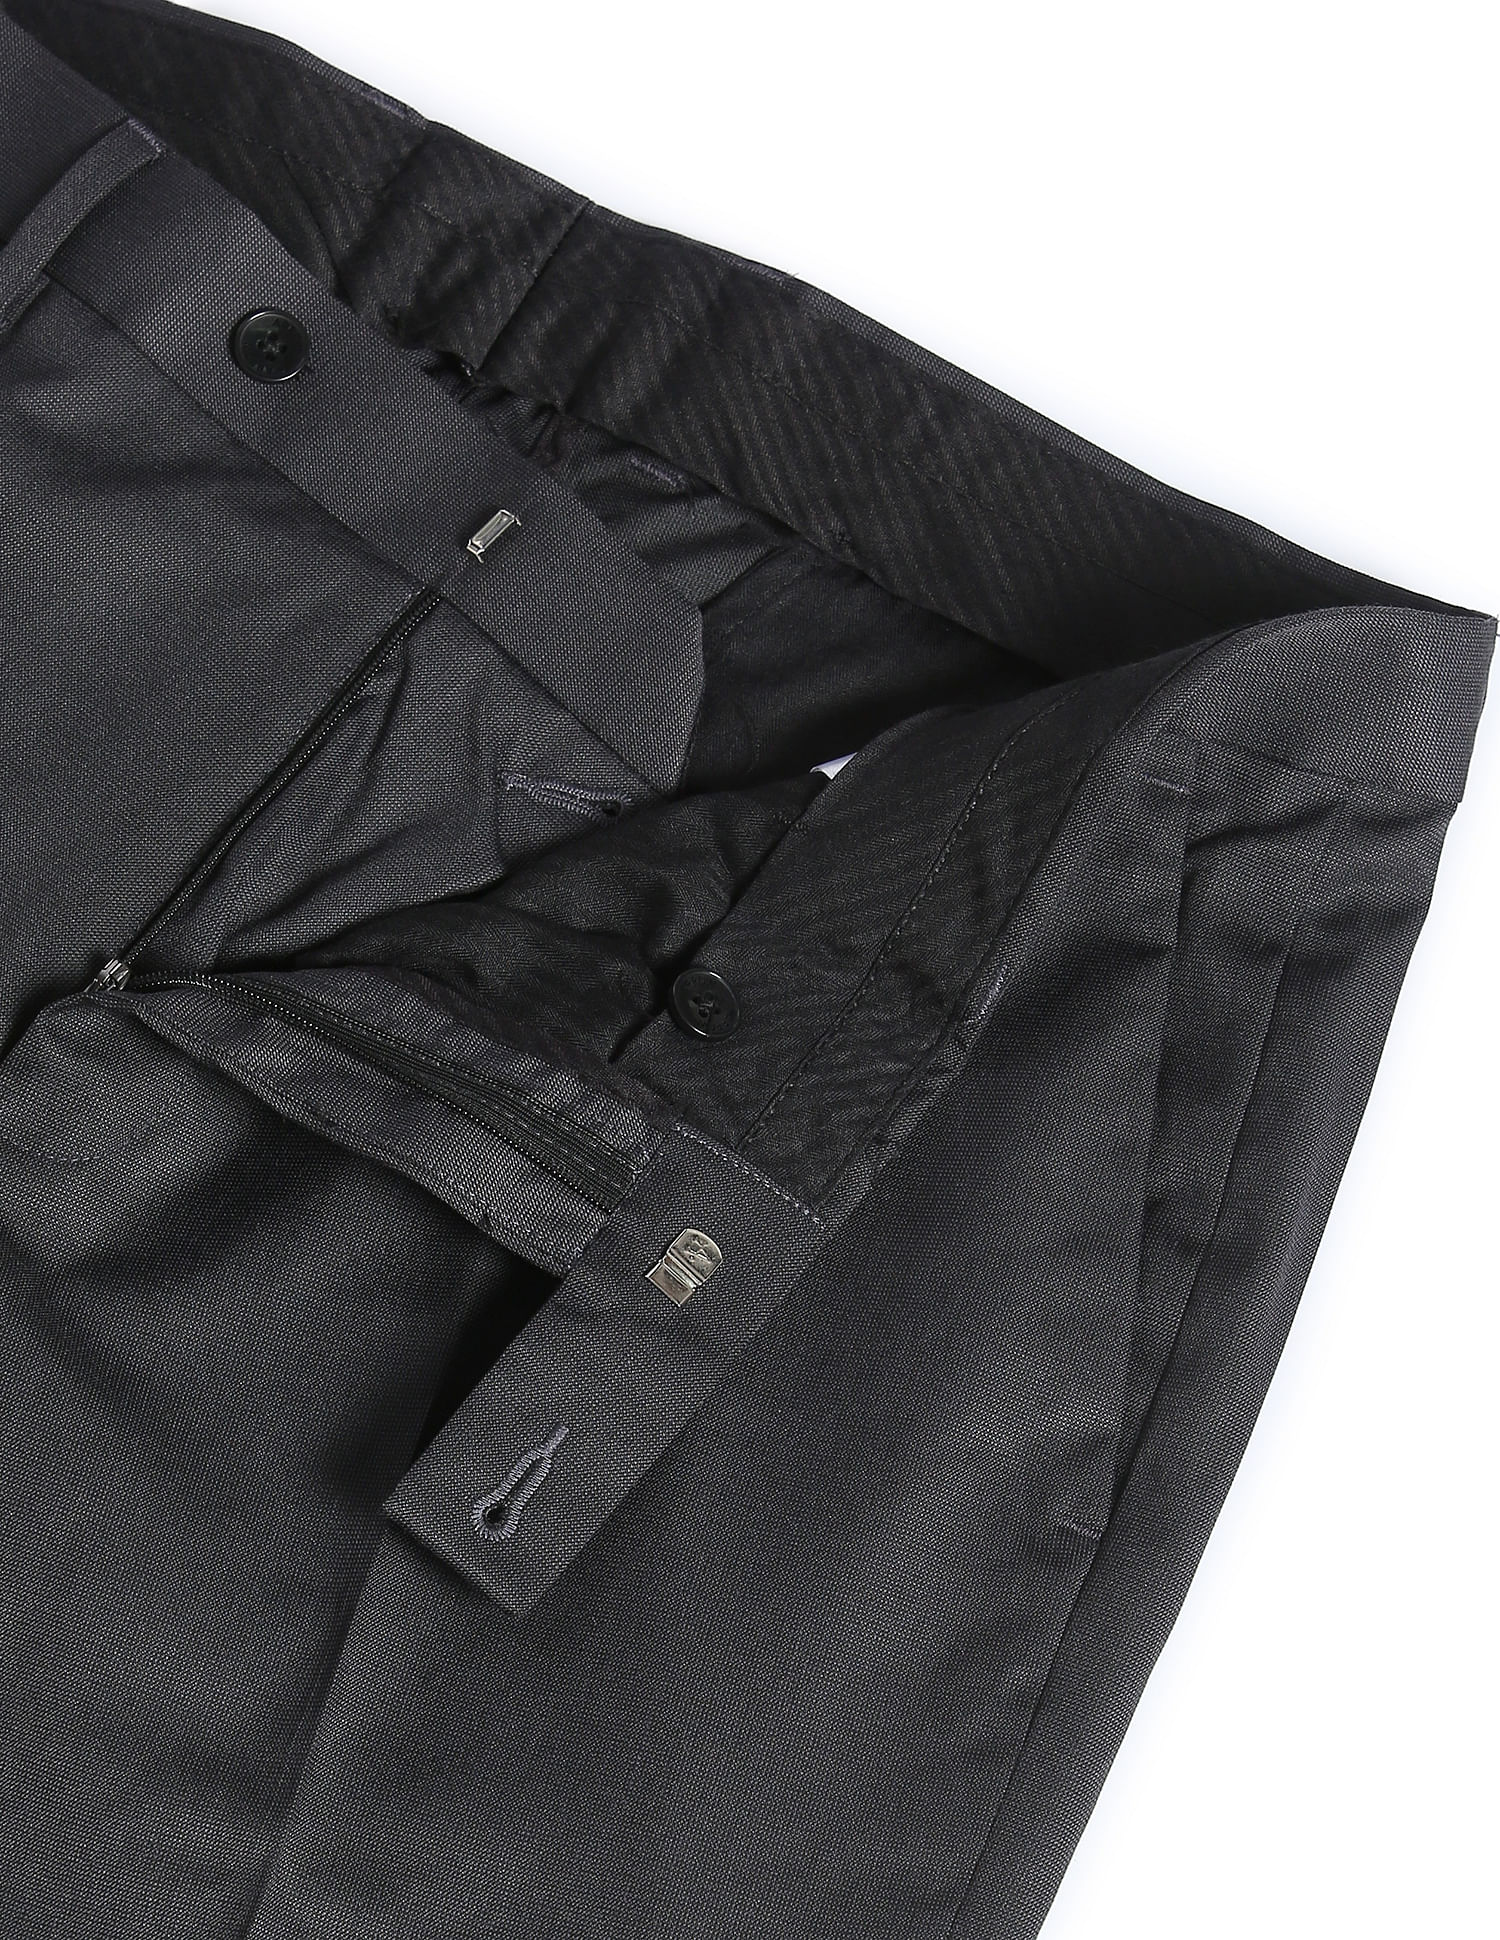 The Active Series™ Herringbone Suit Jacket